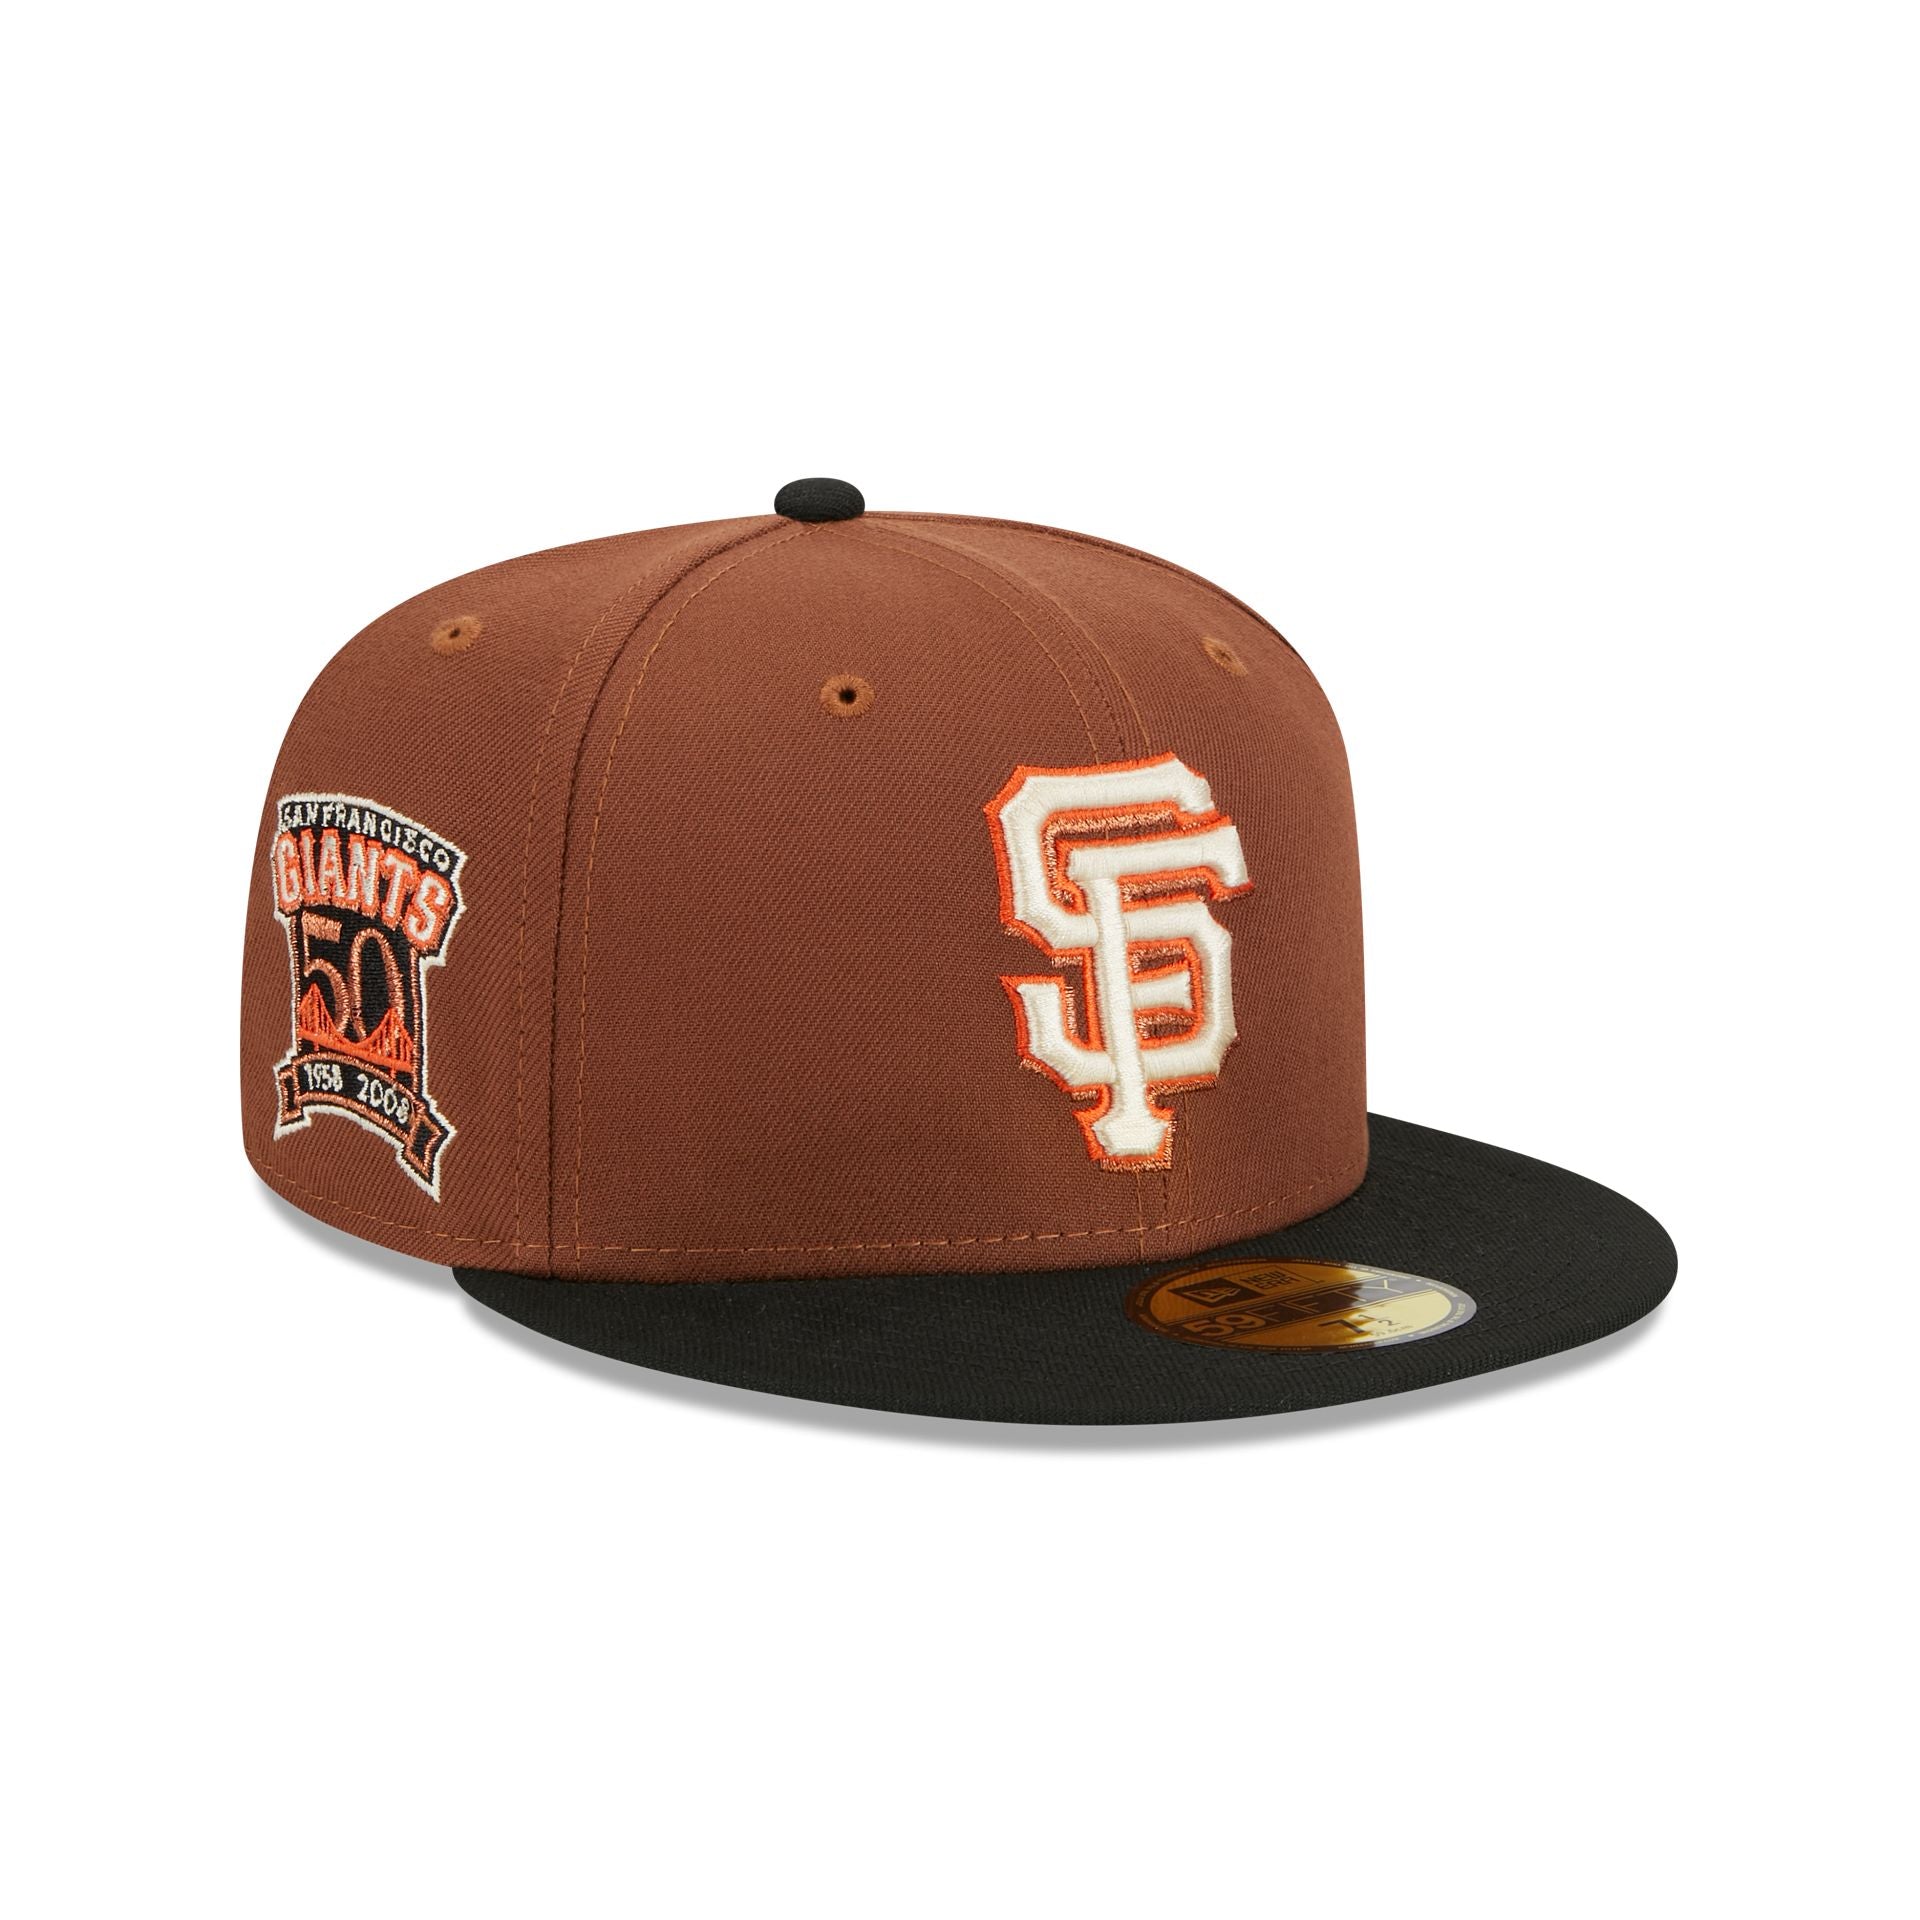 New Era 950 MLB Basic Team Color SAN Francisco Giants Snapback Cap